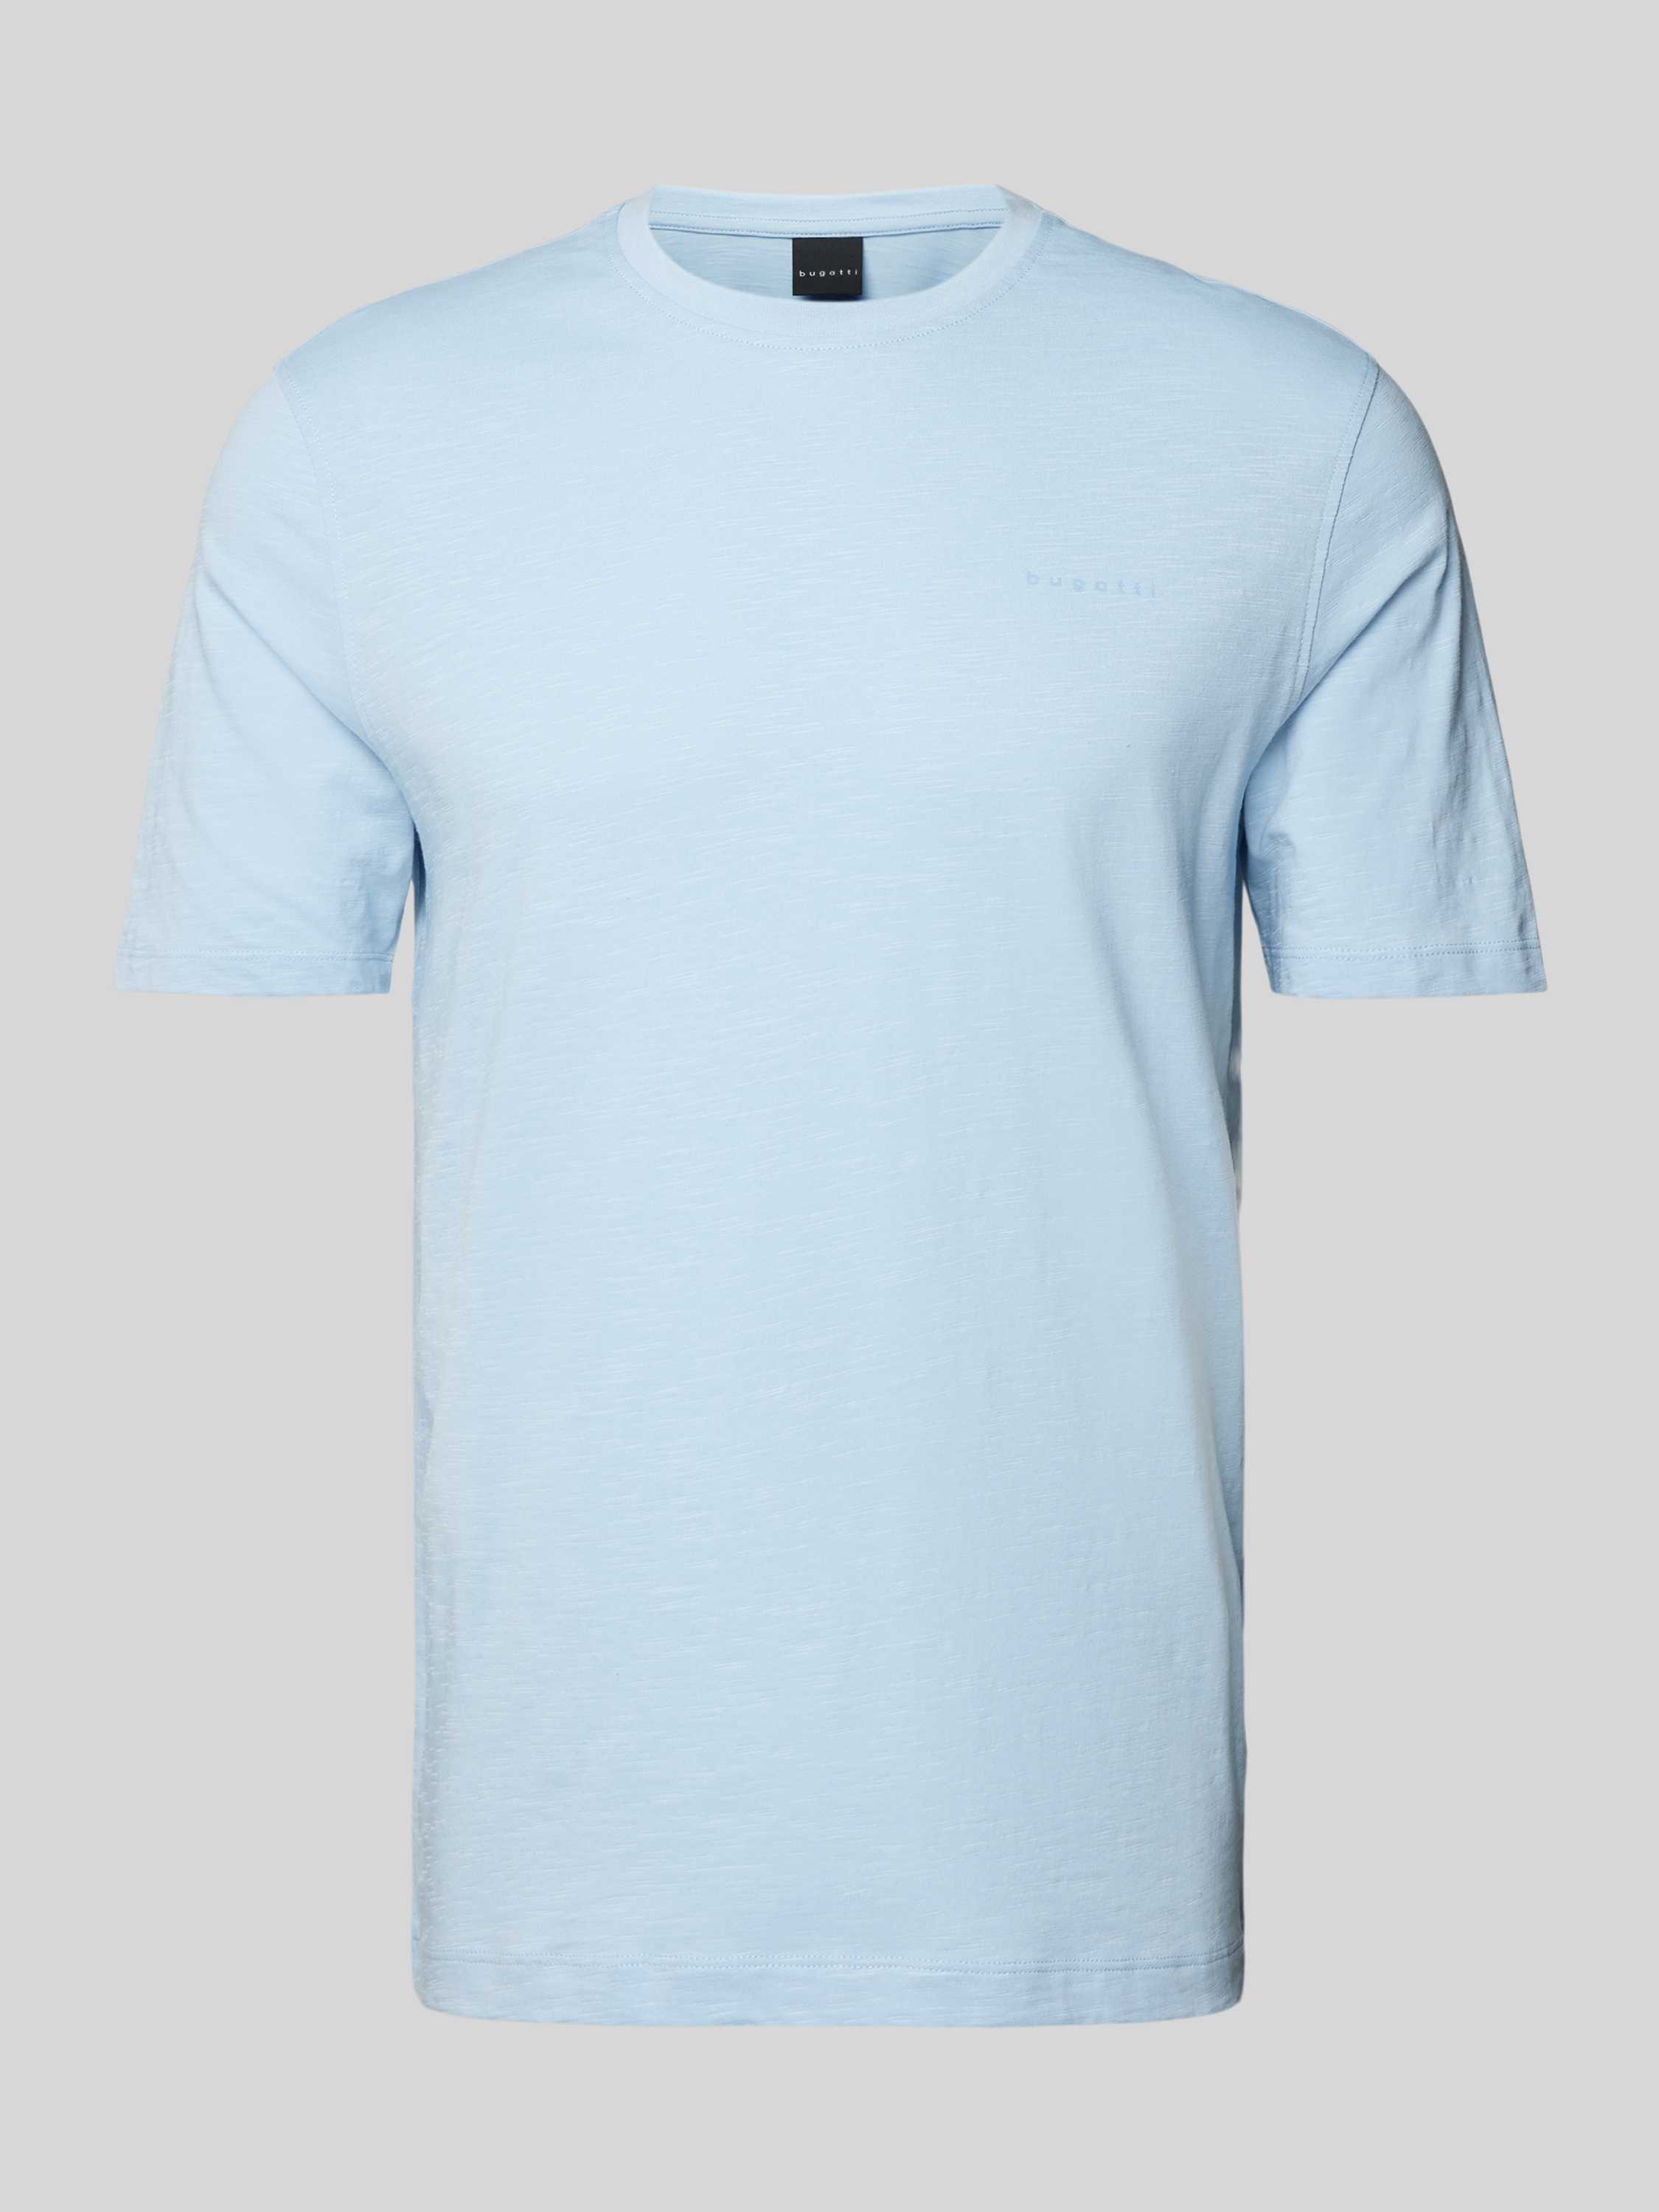 T-Shirt im unifarbenen Design